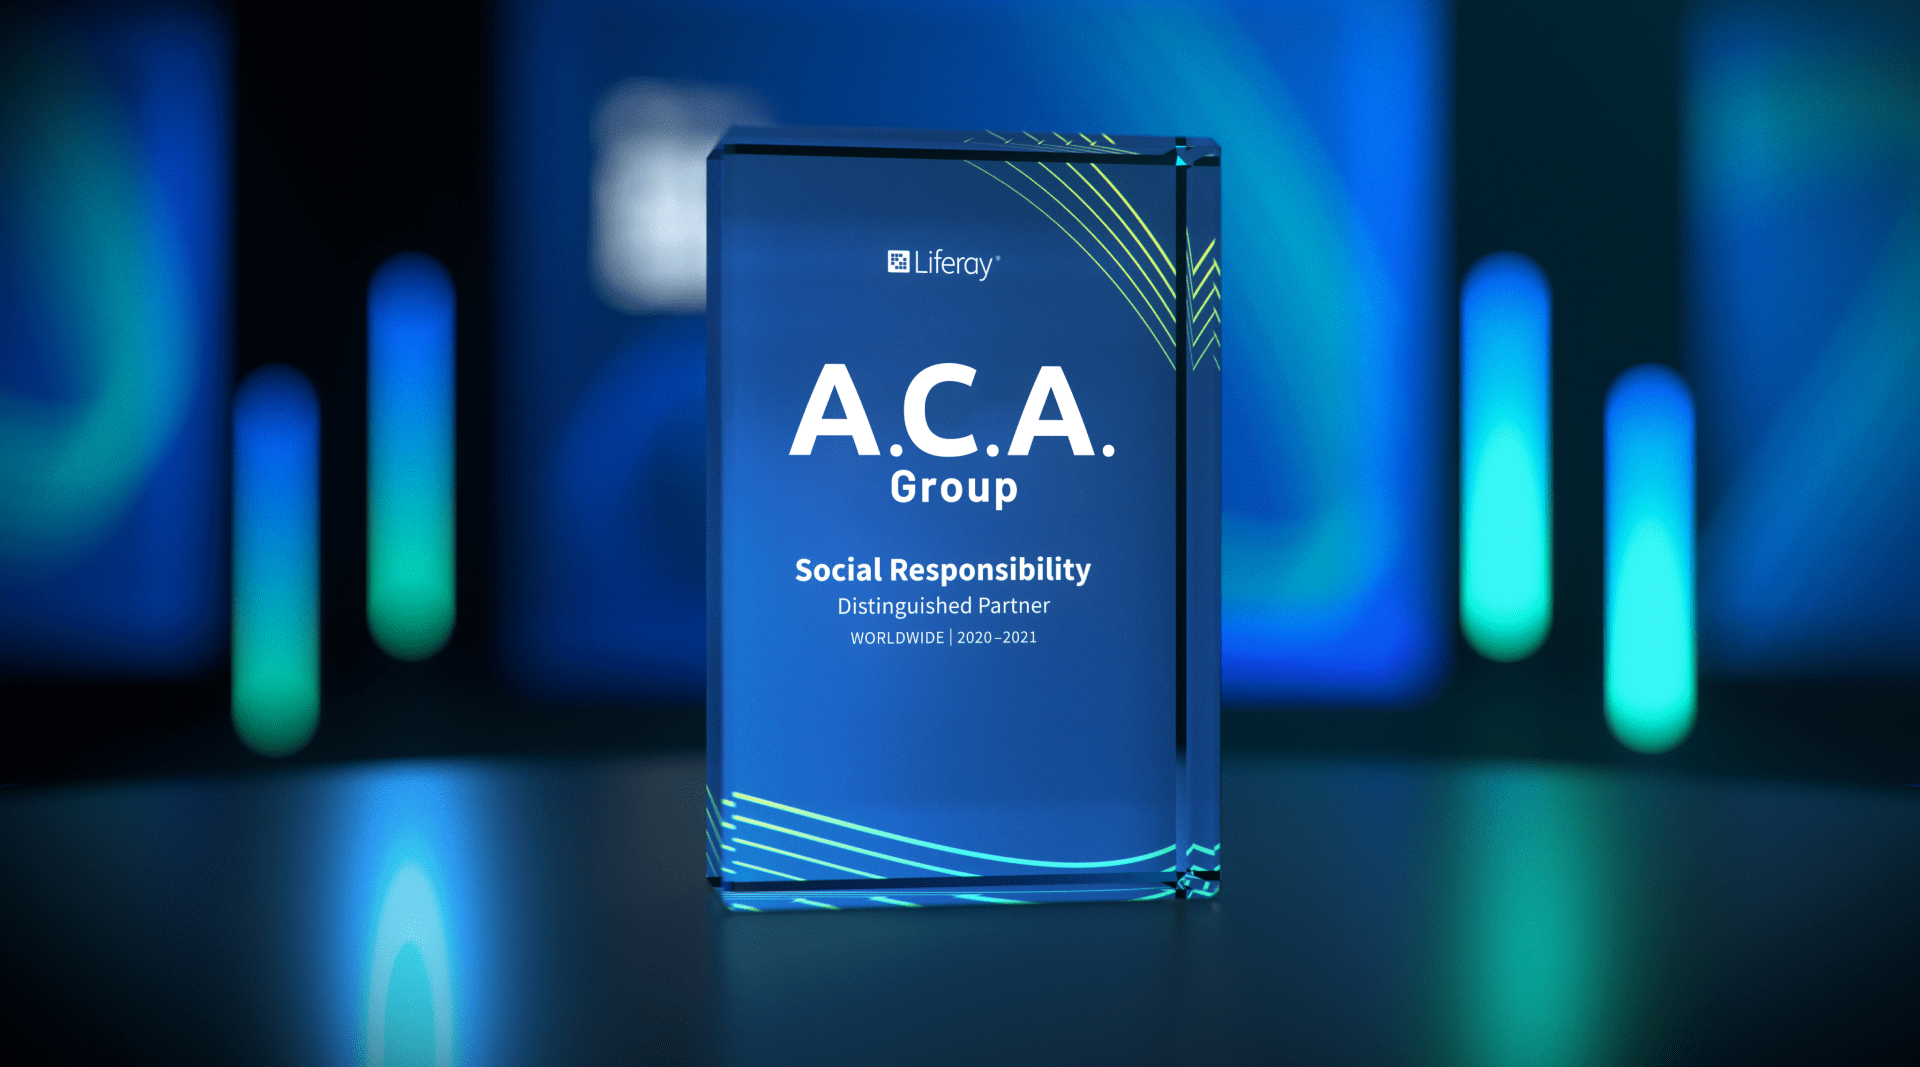 ACA Group Honored with Liferay Partner Award 2021